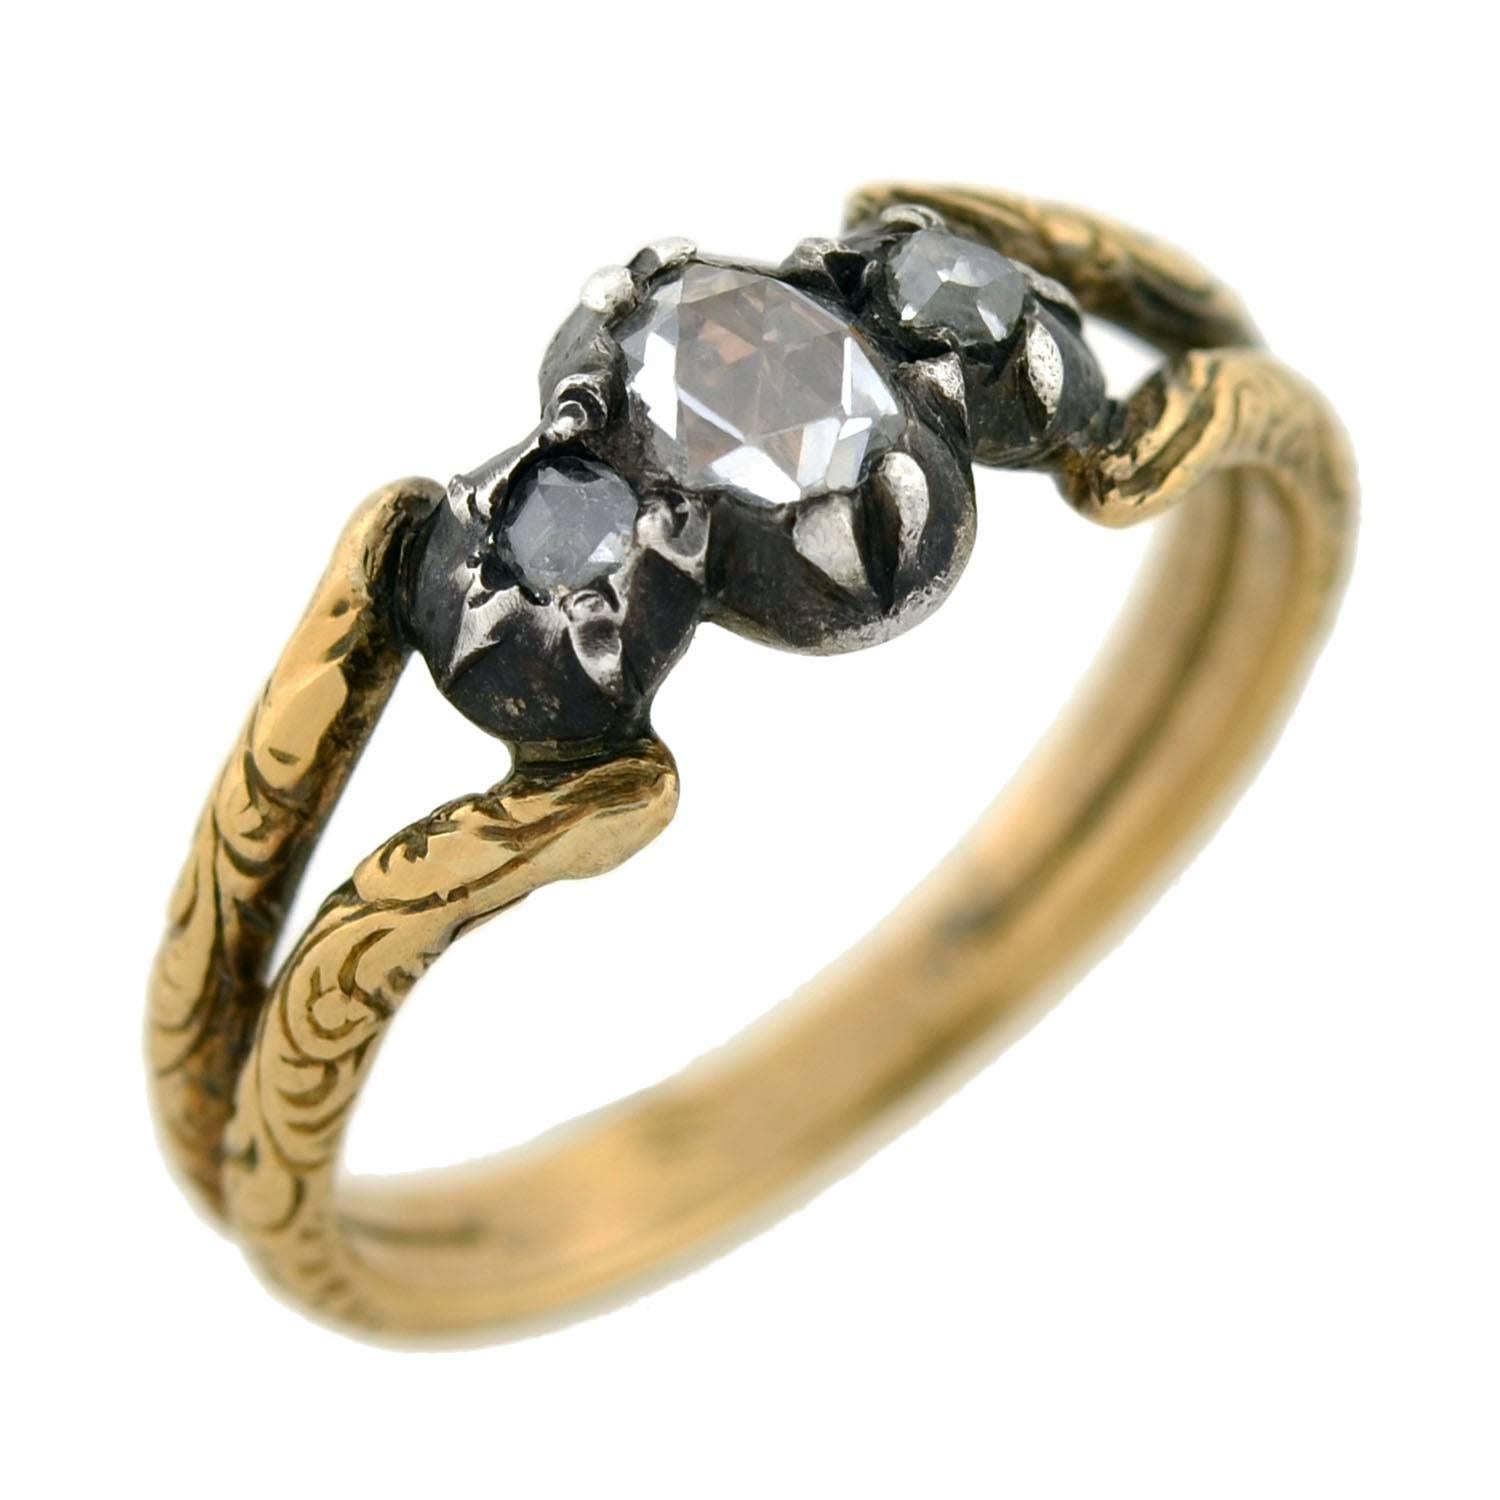 Women's Georgian French Mixed Metals Rose Cut Diamond Ring